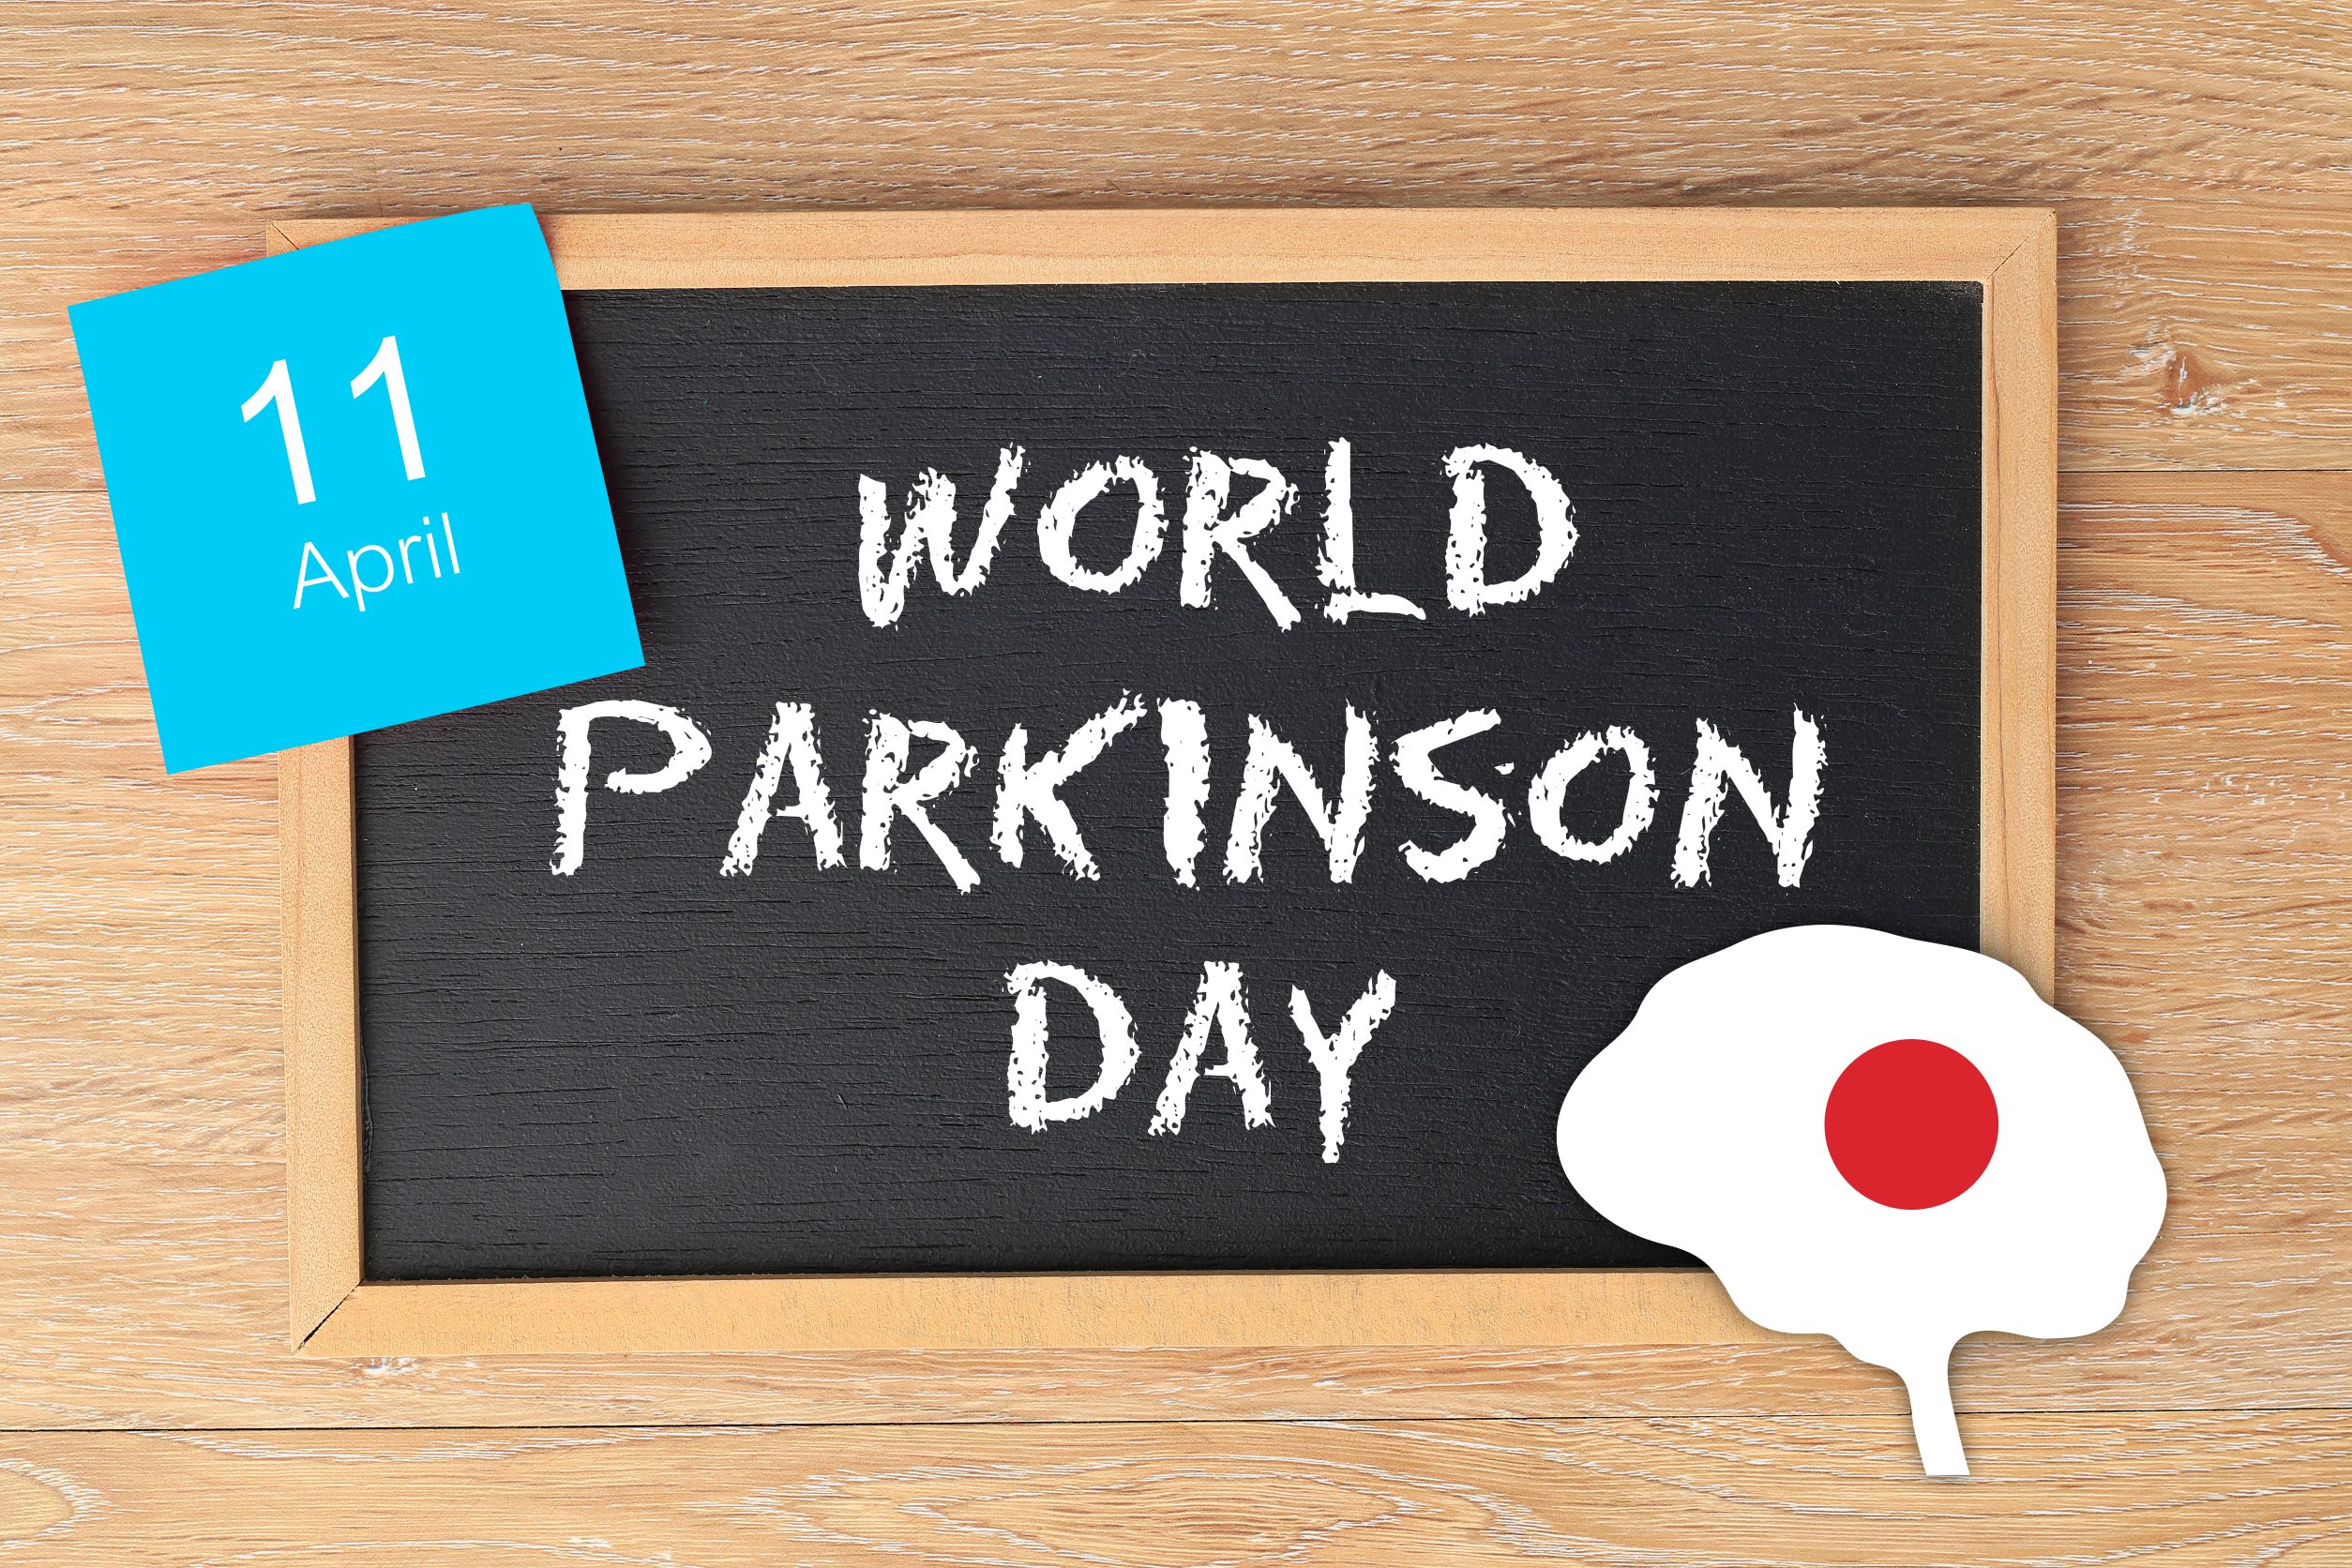 World Parkinson Day am 11. April